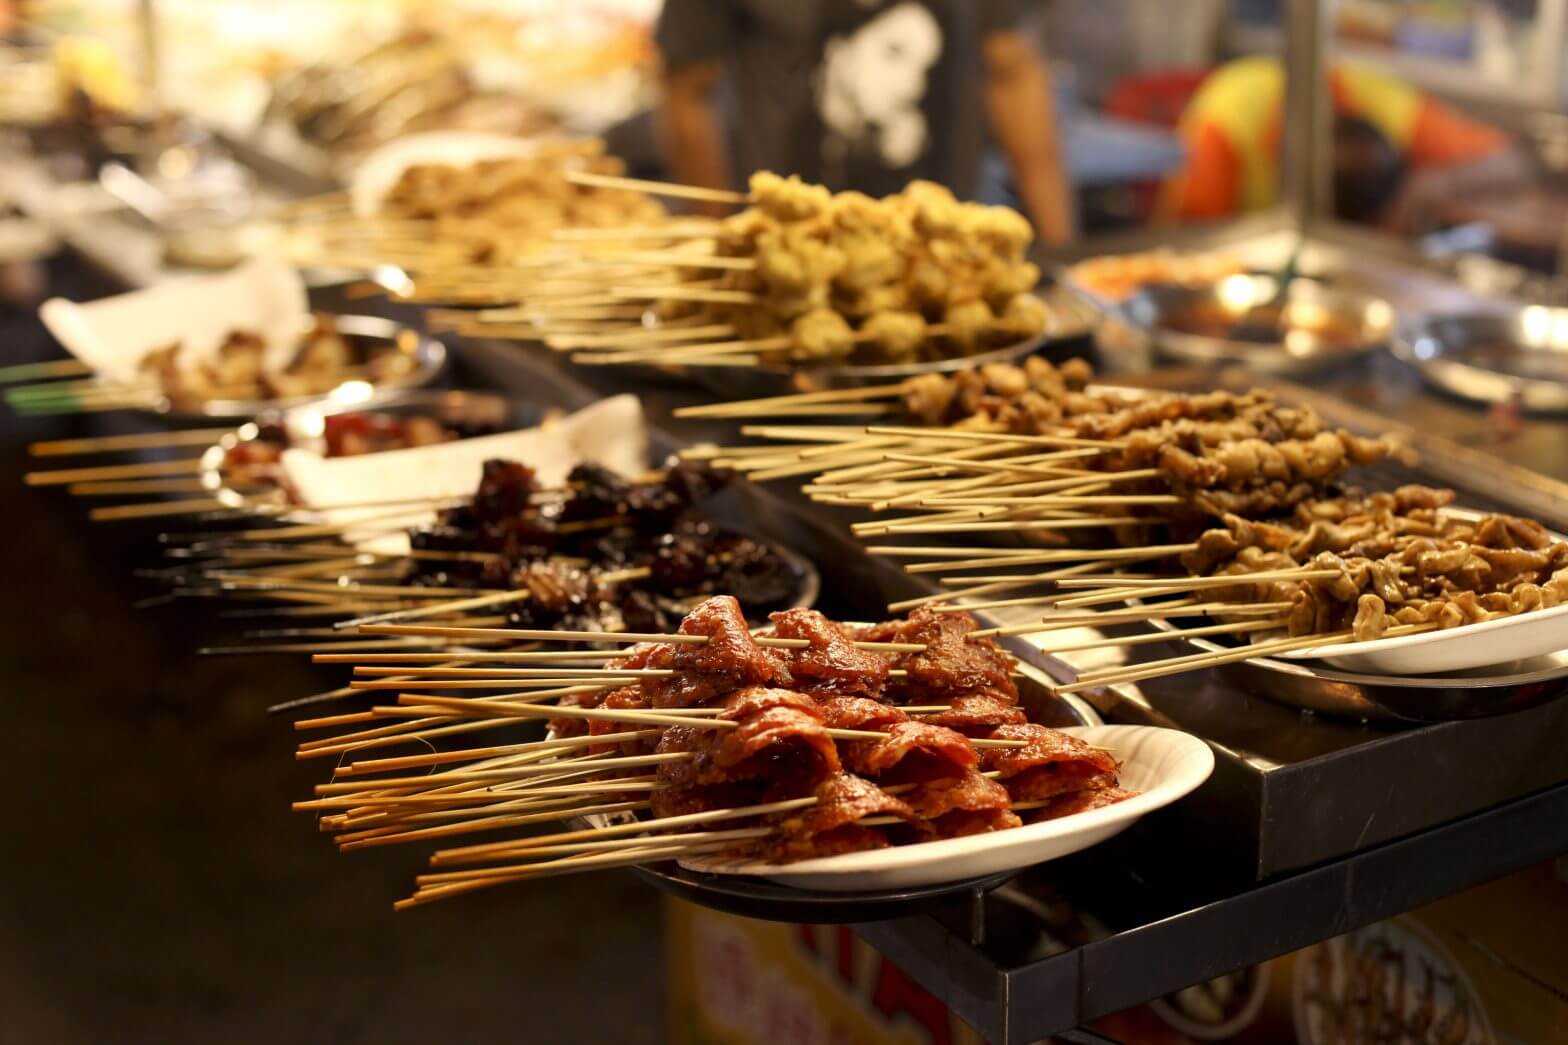 Kuala Lumpur's street food scene